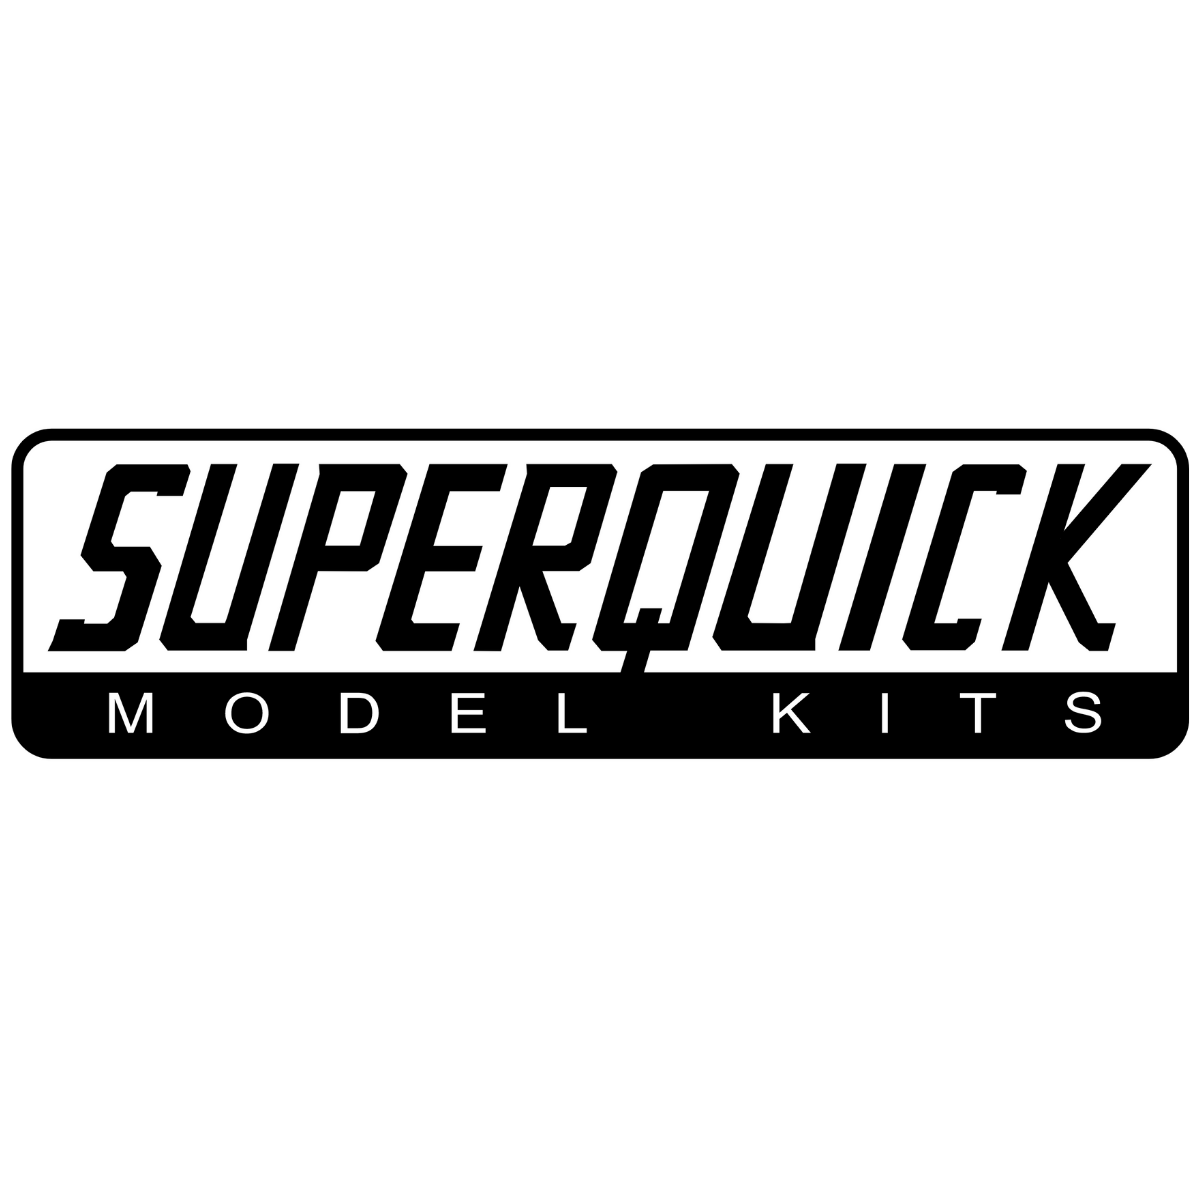 Superquick Model Kits - Phillips Hobbies